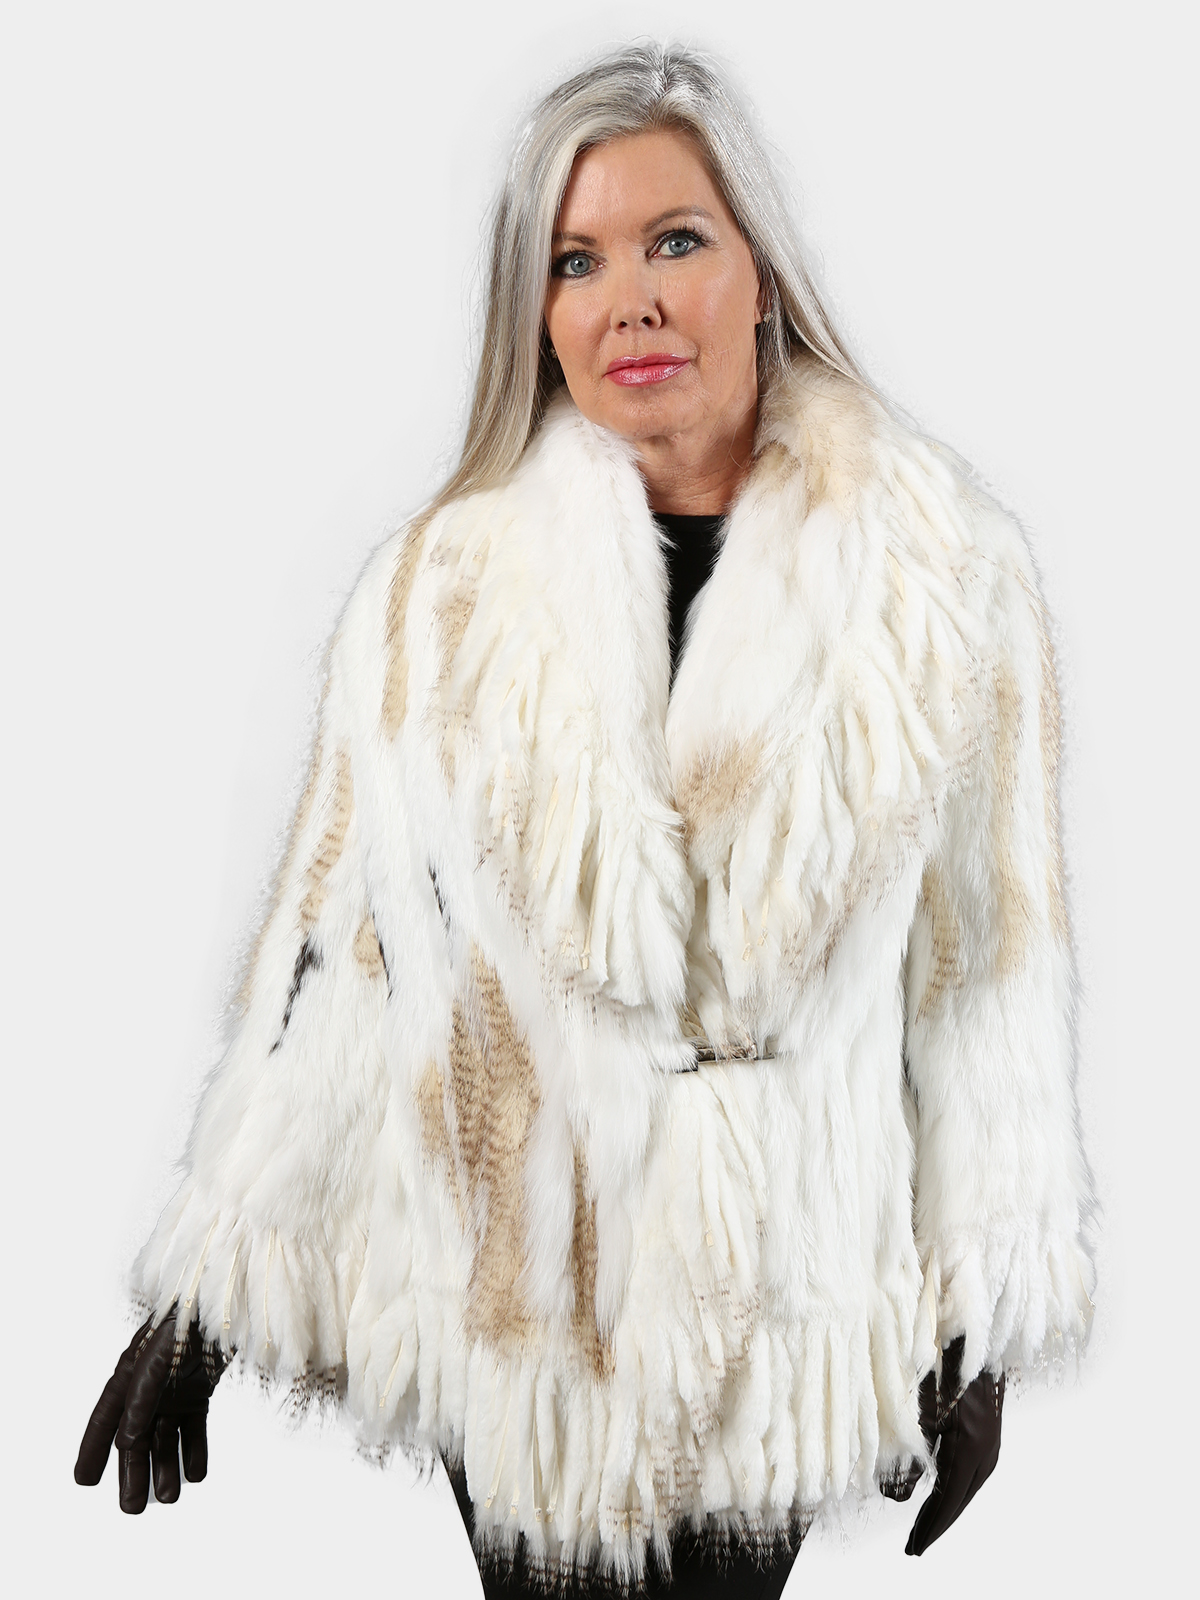 Day Furs Inc. Woman's Black Knit Rex Rabbit Fur Jacket